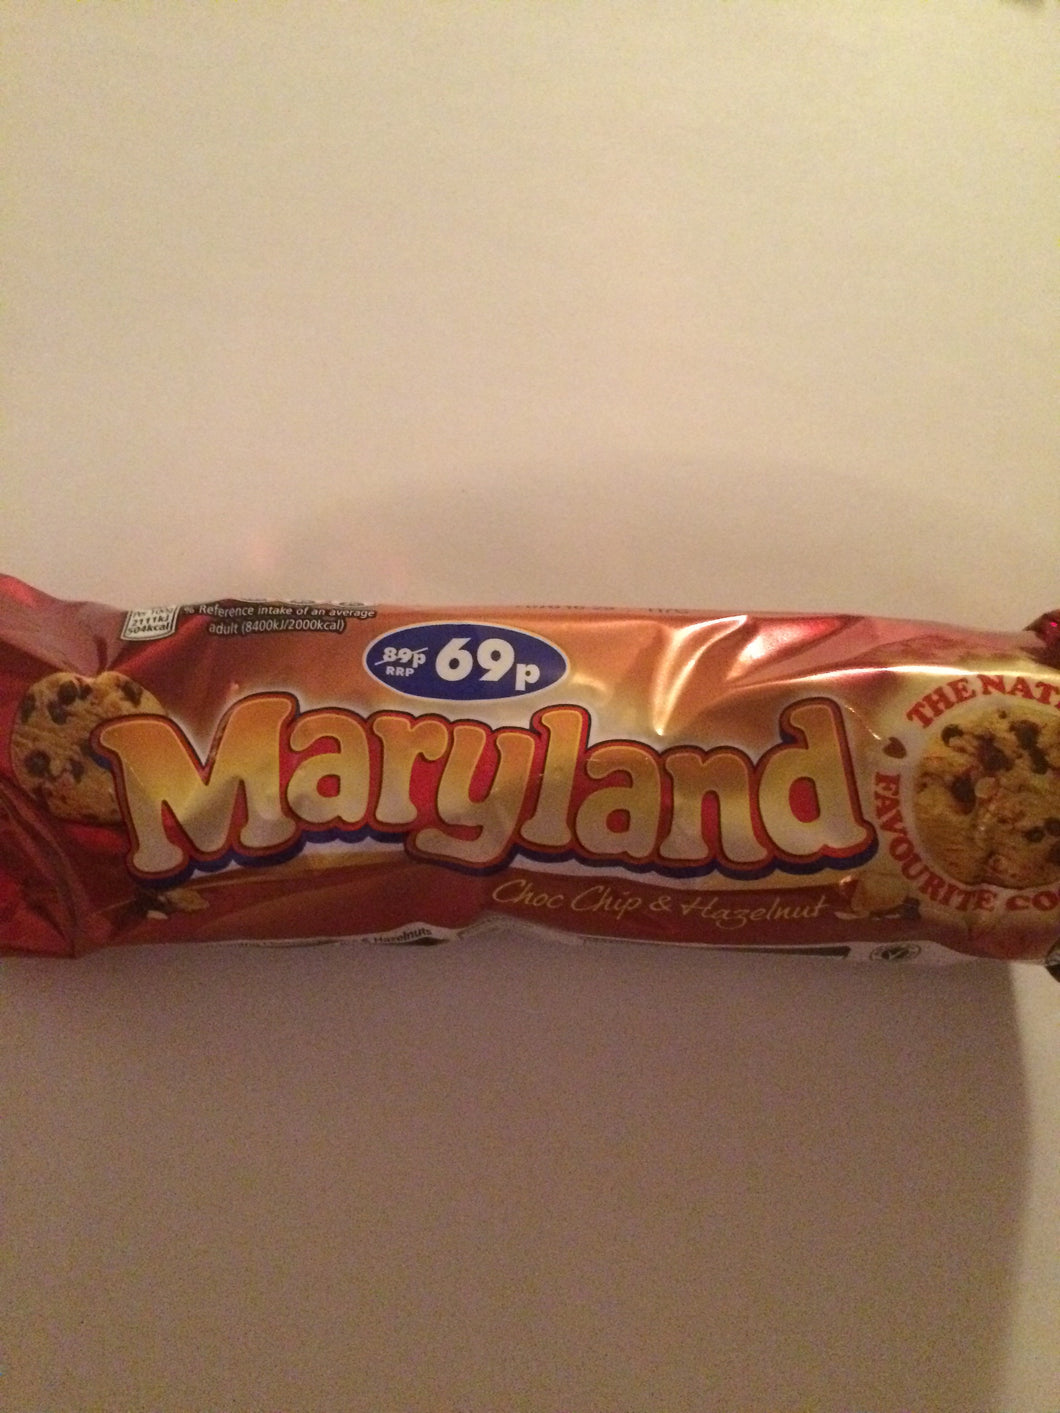 Maryland Choc Chip & Hazelnut Cookie 145g